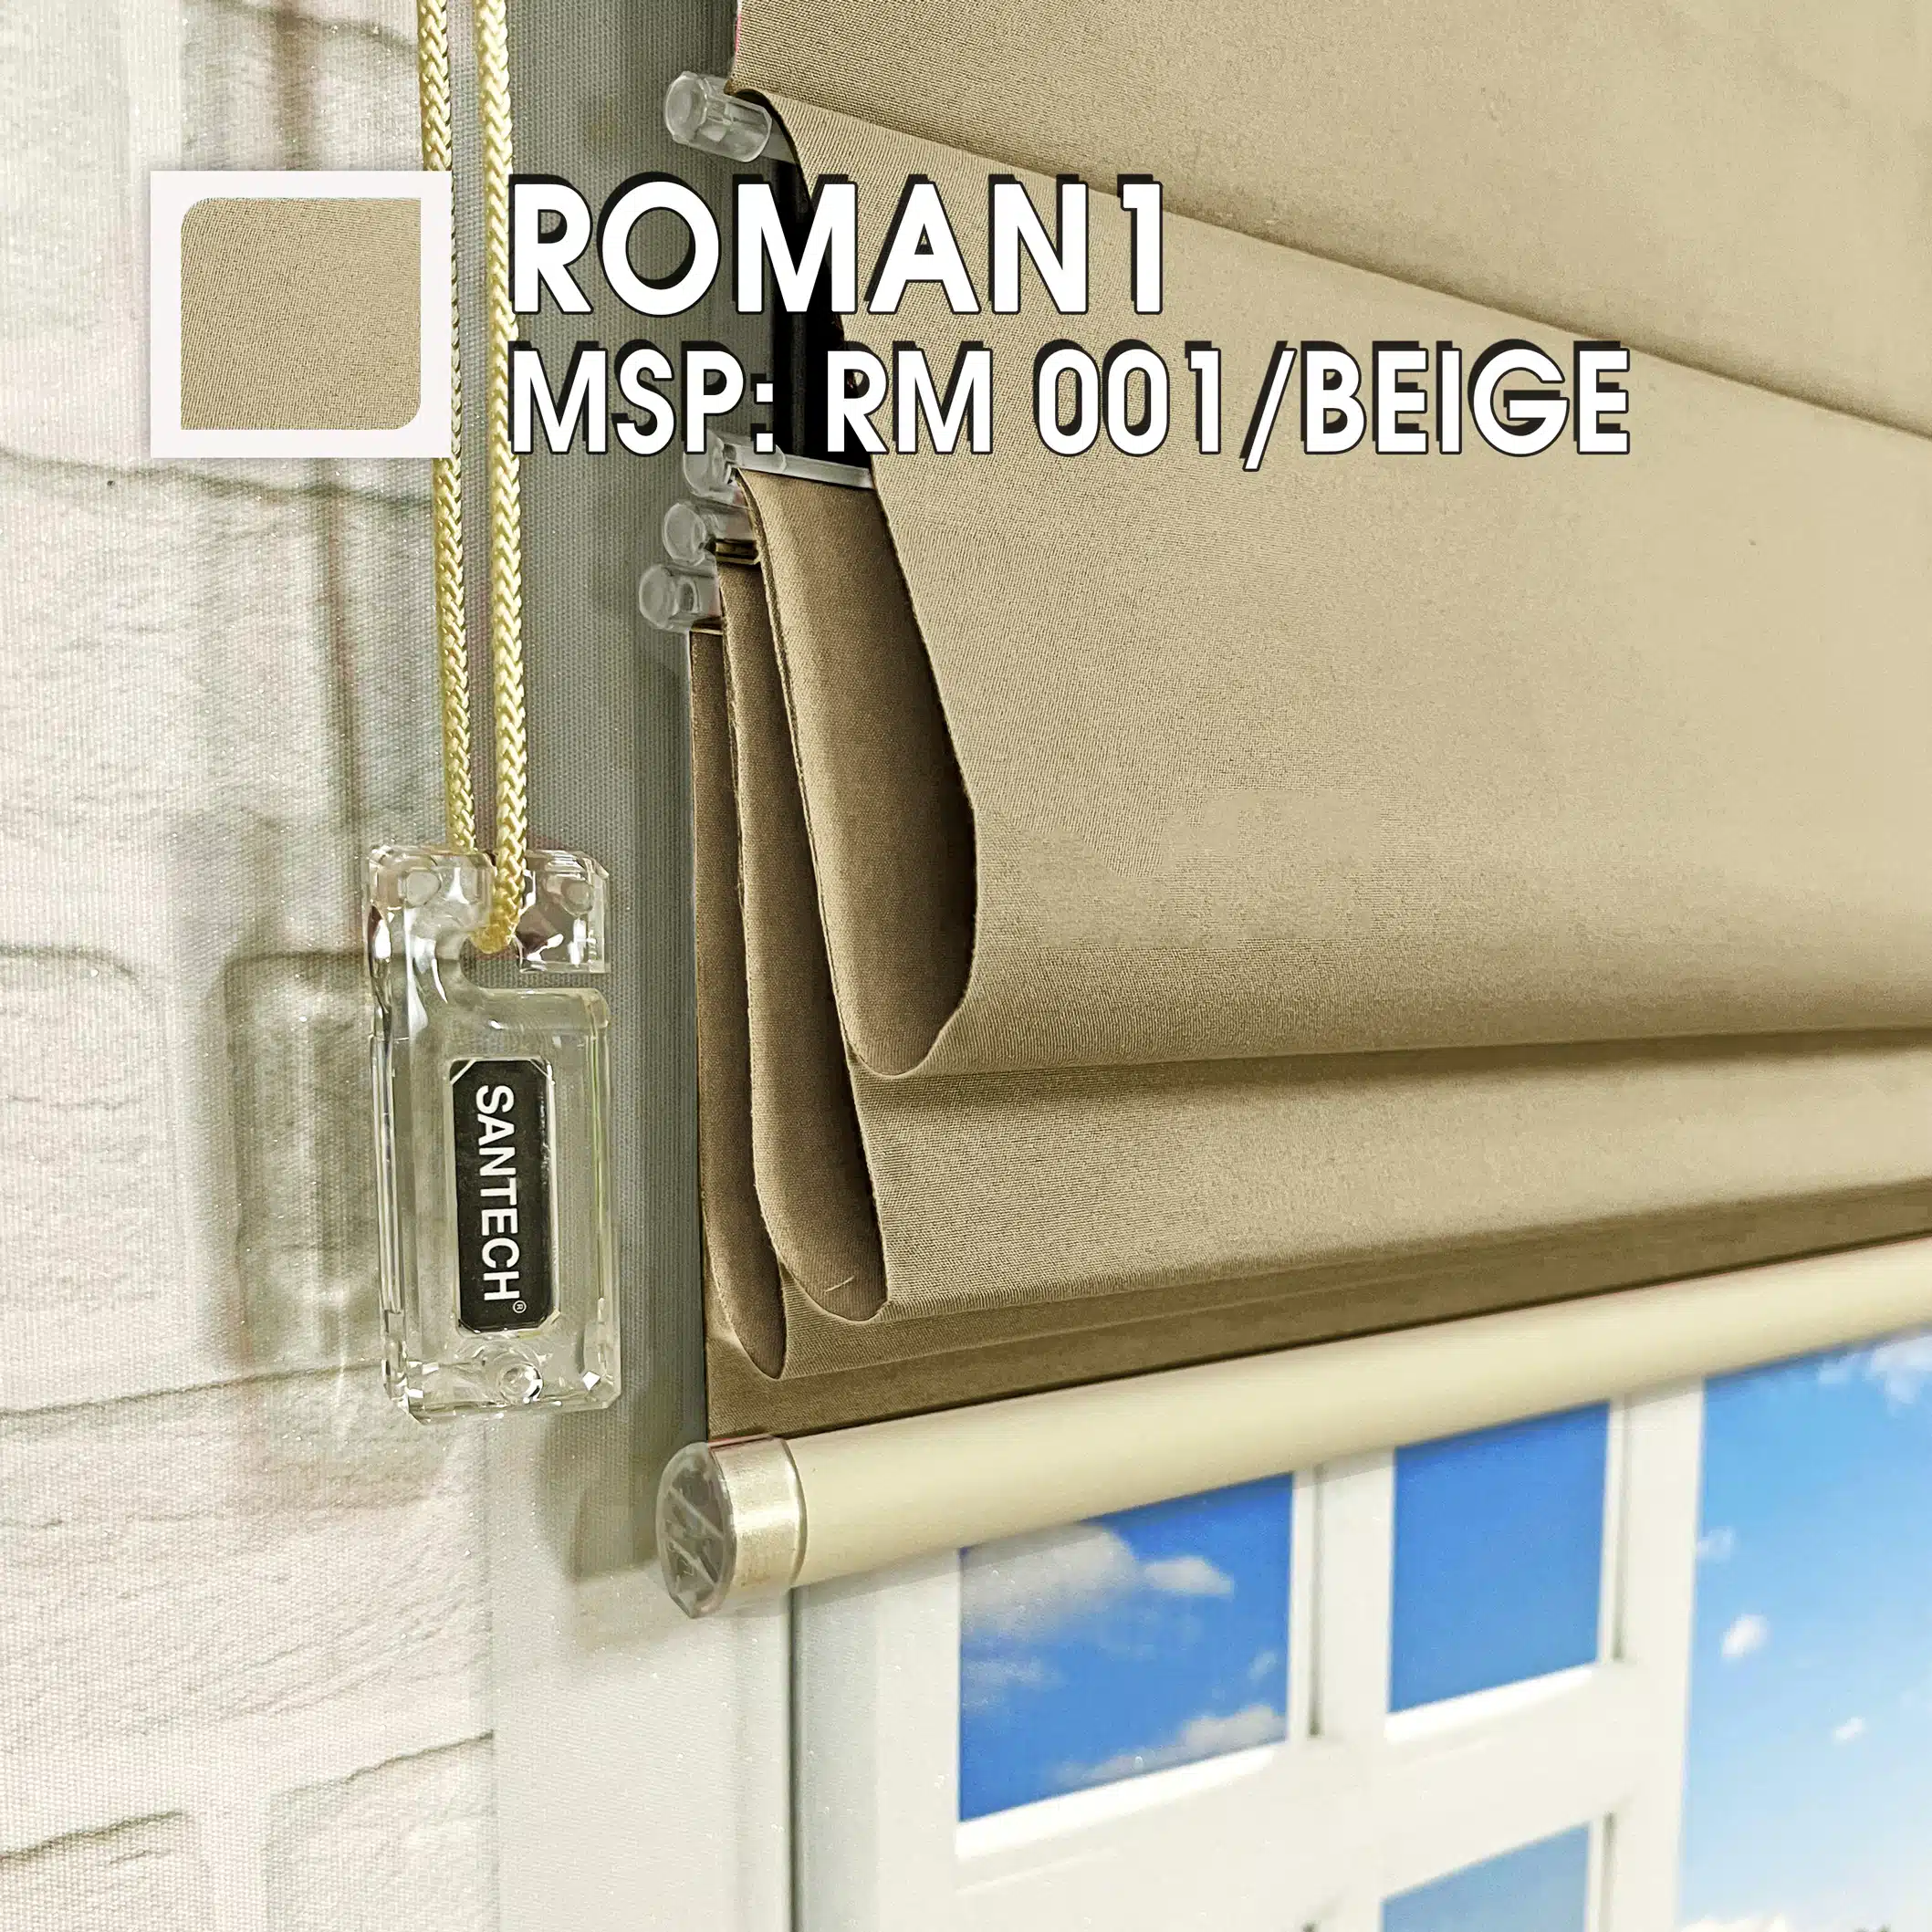 Roman1 Rm 001 